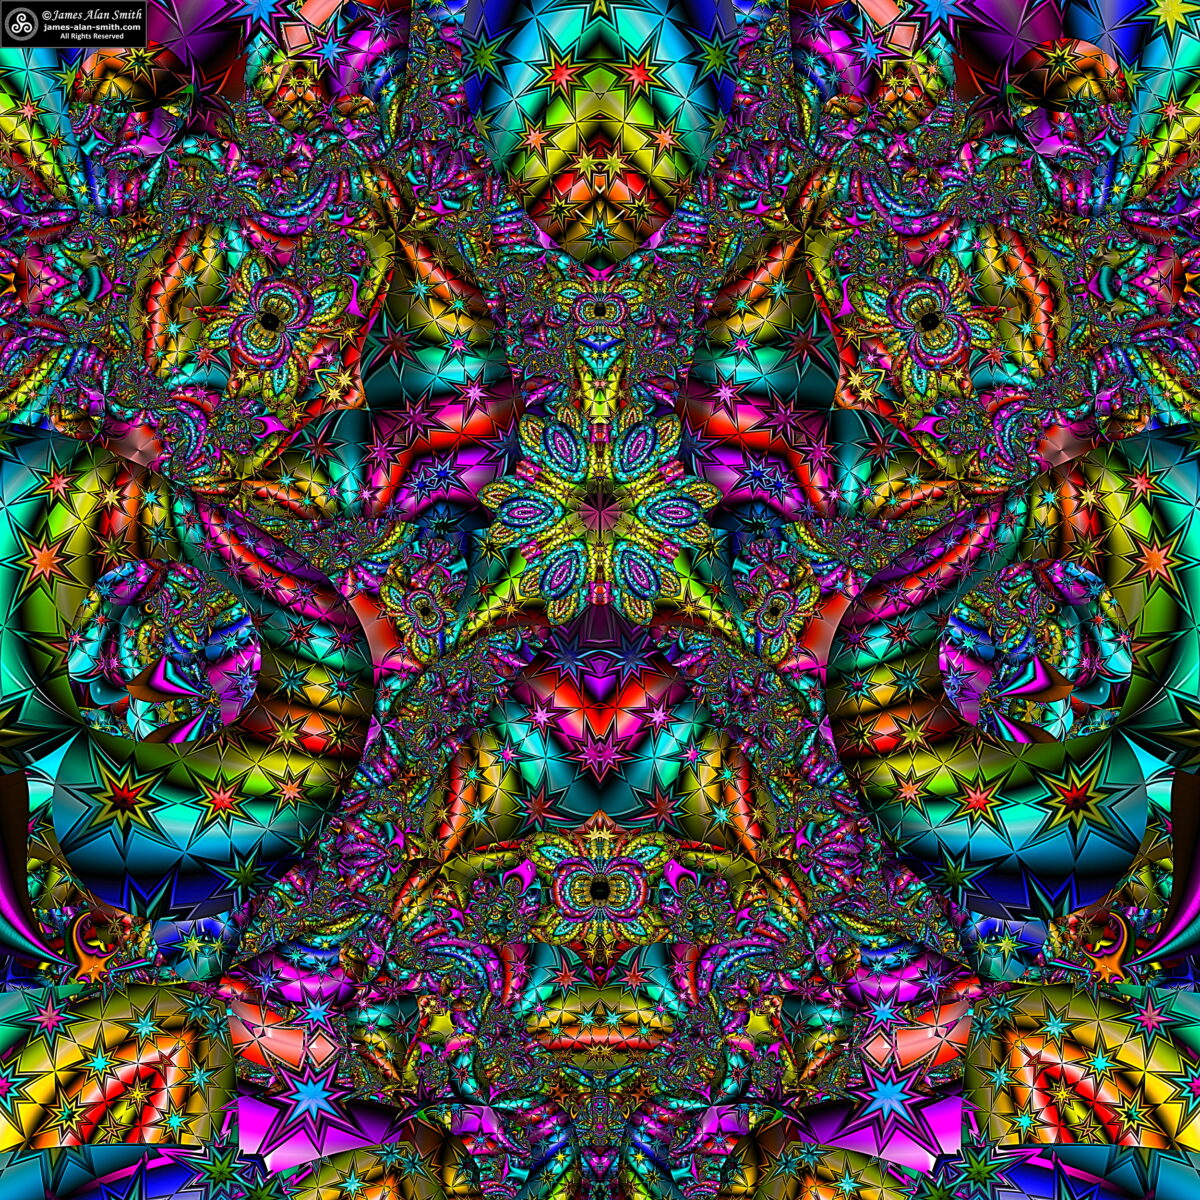 Metamorphosis of Color and Kinetic Dimensionality: Artwork by James Alan Smith